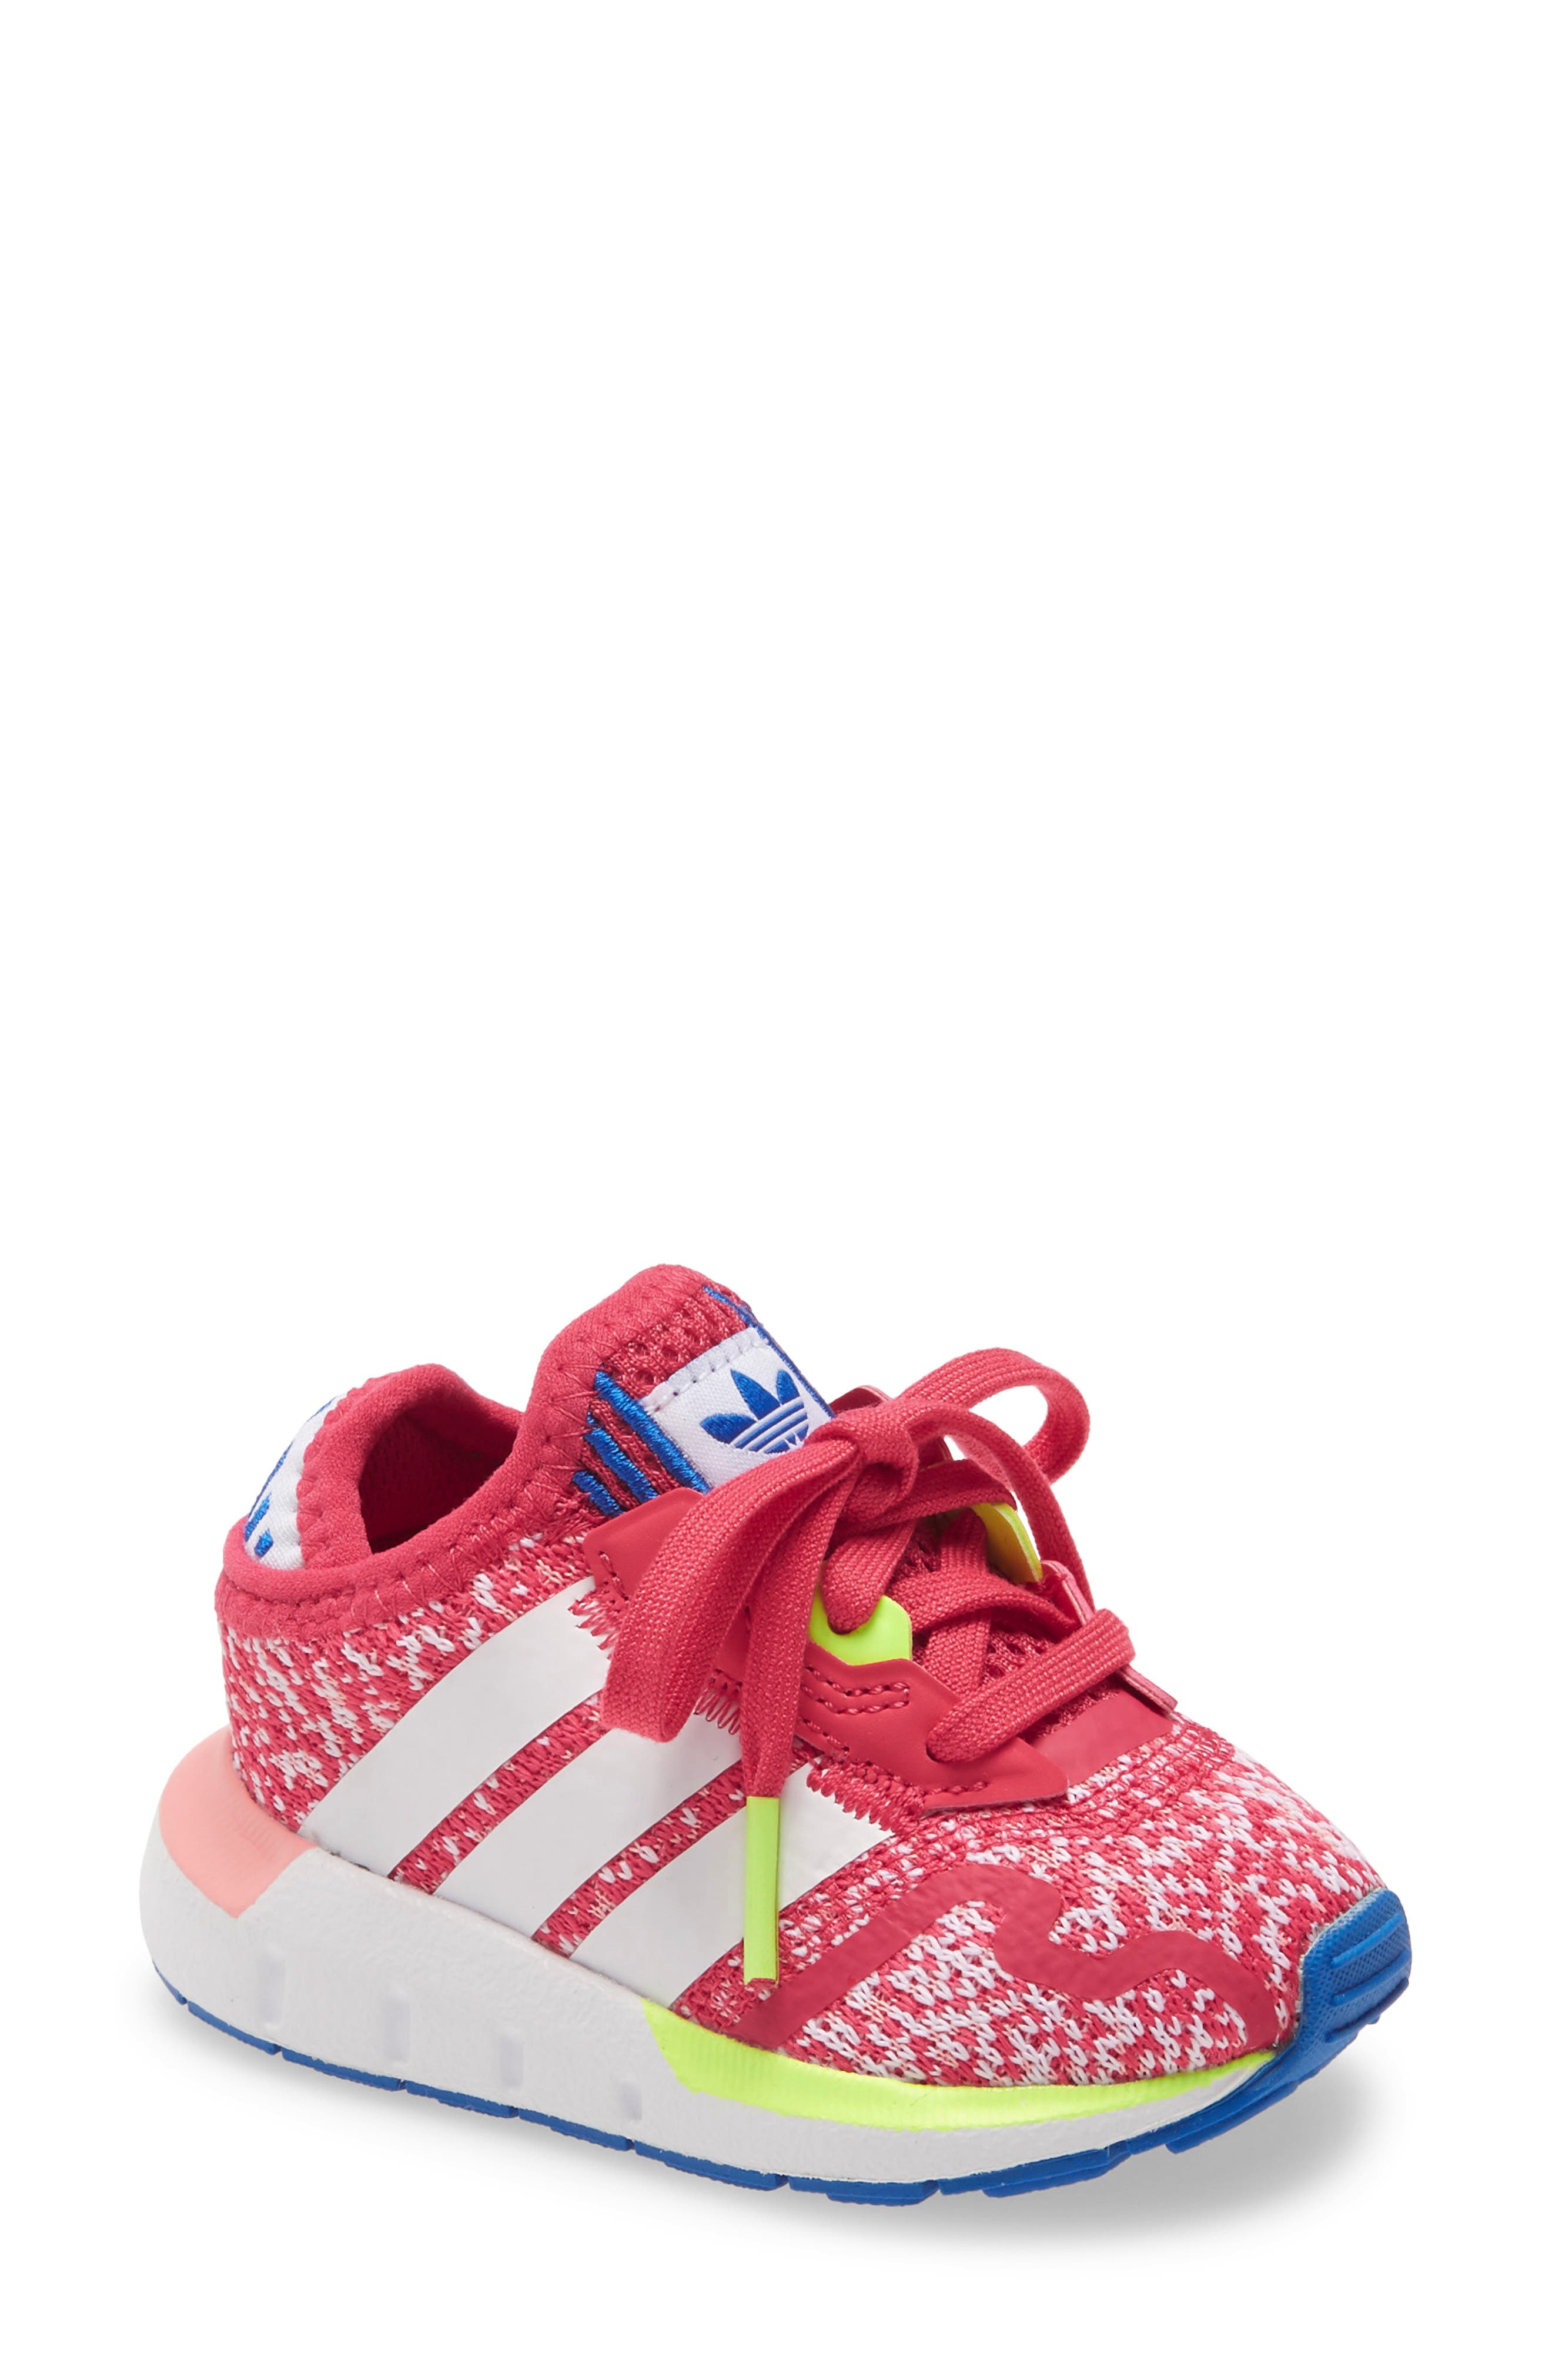 Baby adidas, Walker \u0026 Toddler Shoes 